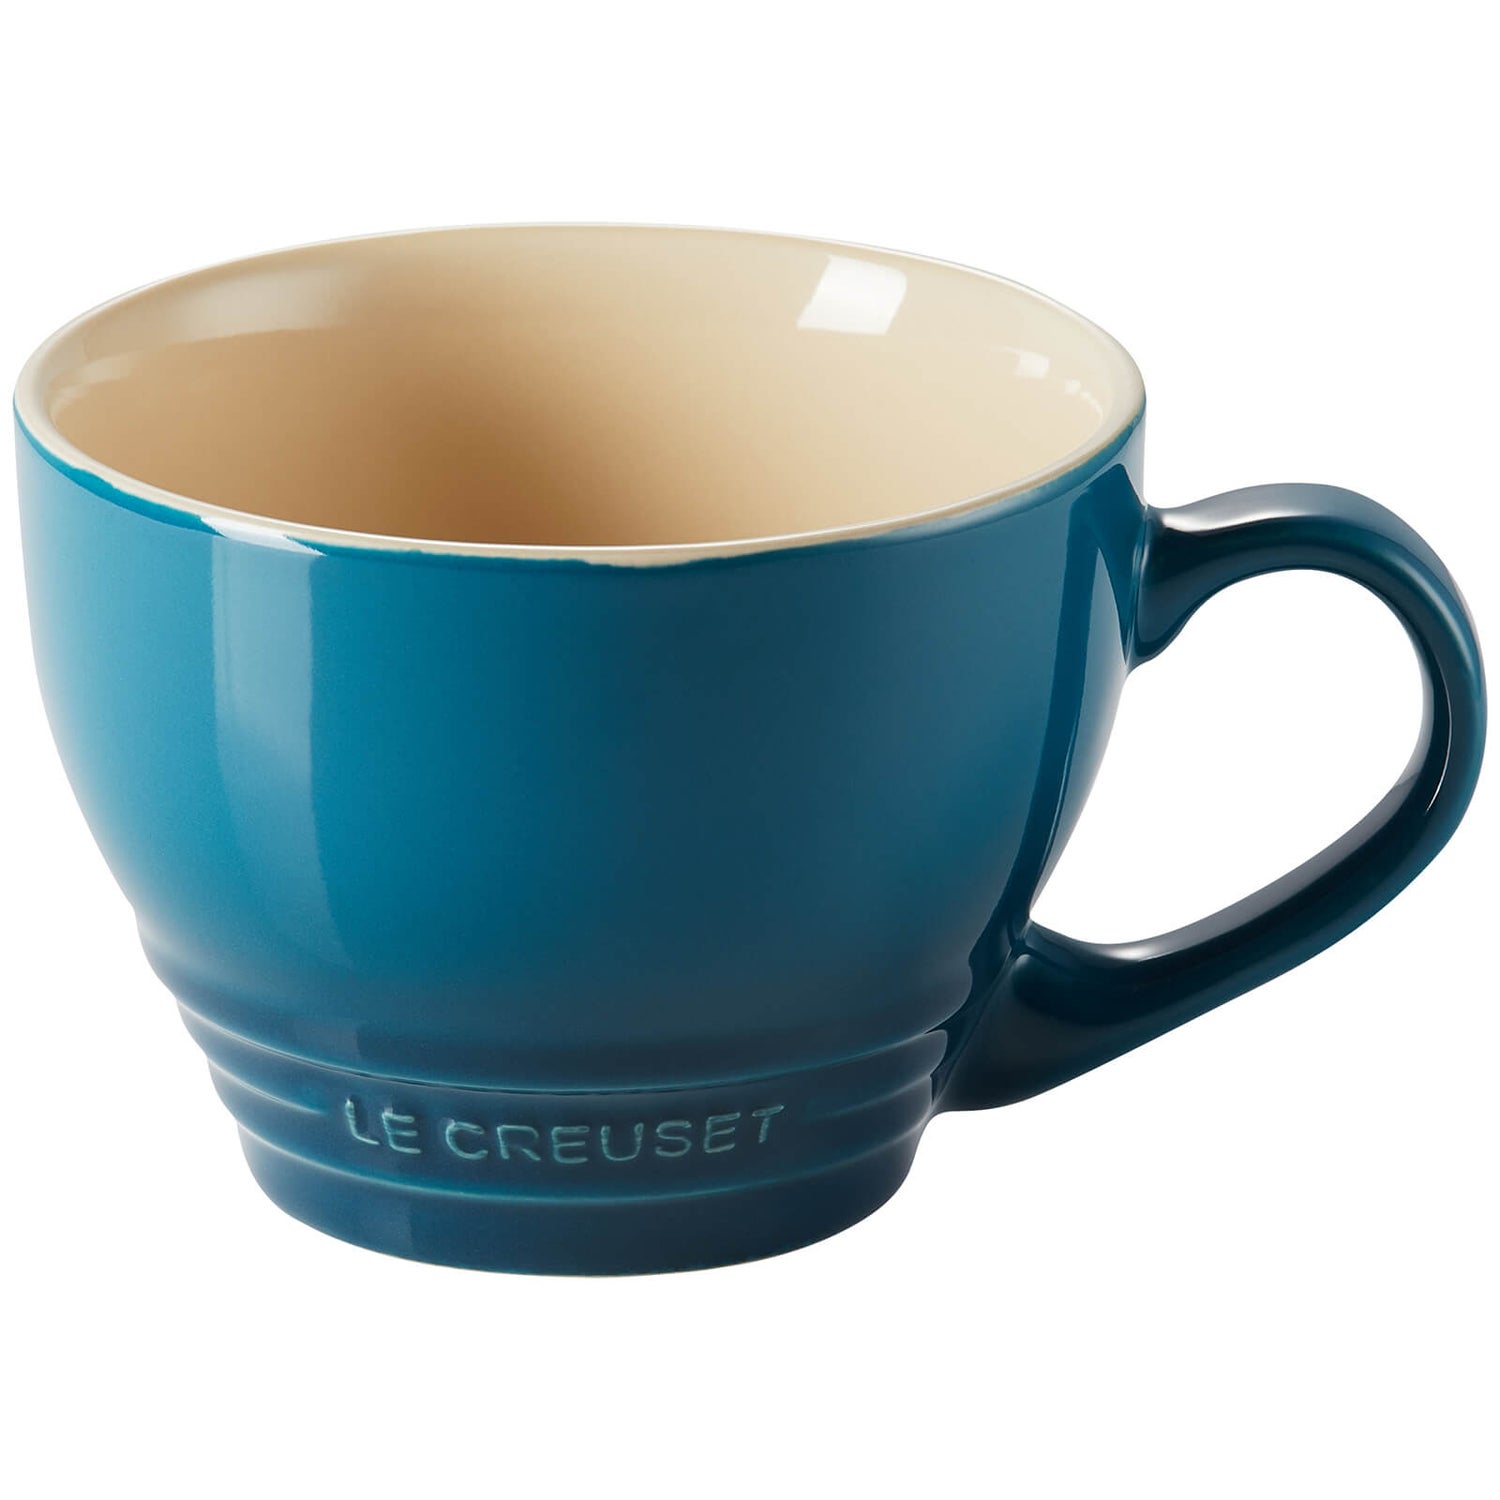 Le Creuset Stoneware Grand Mug - 400ml - Deep Teal